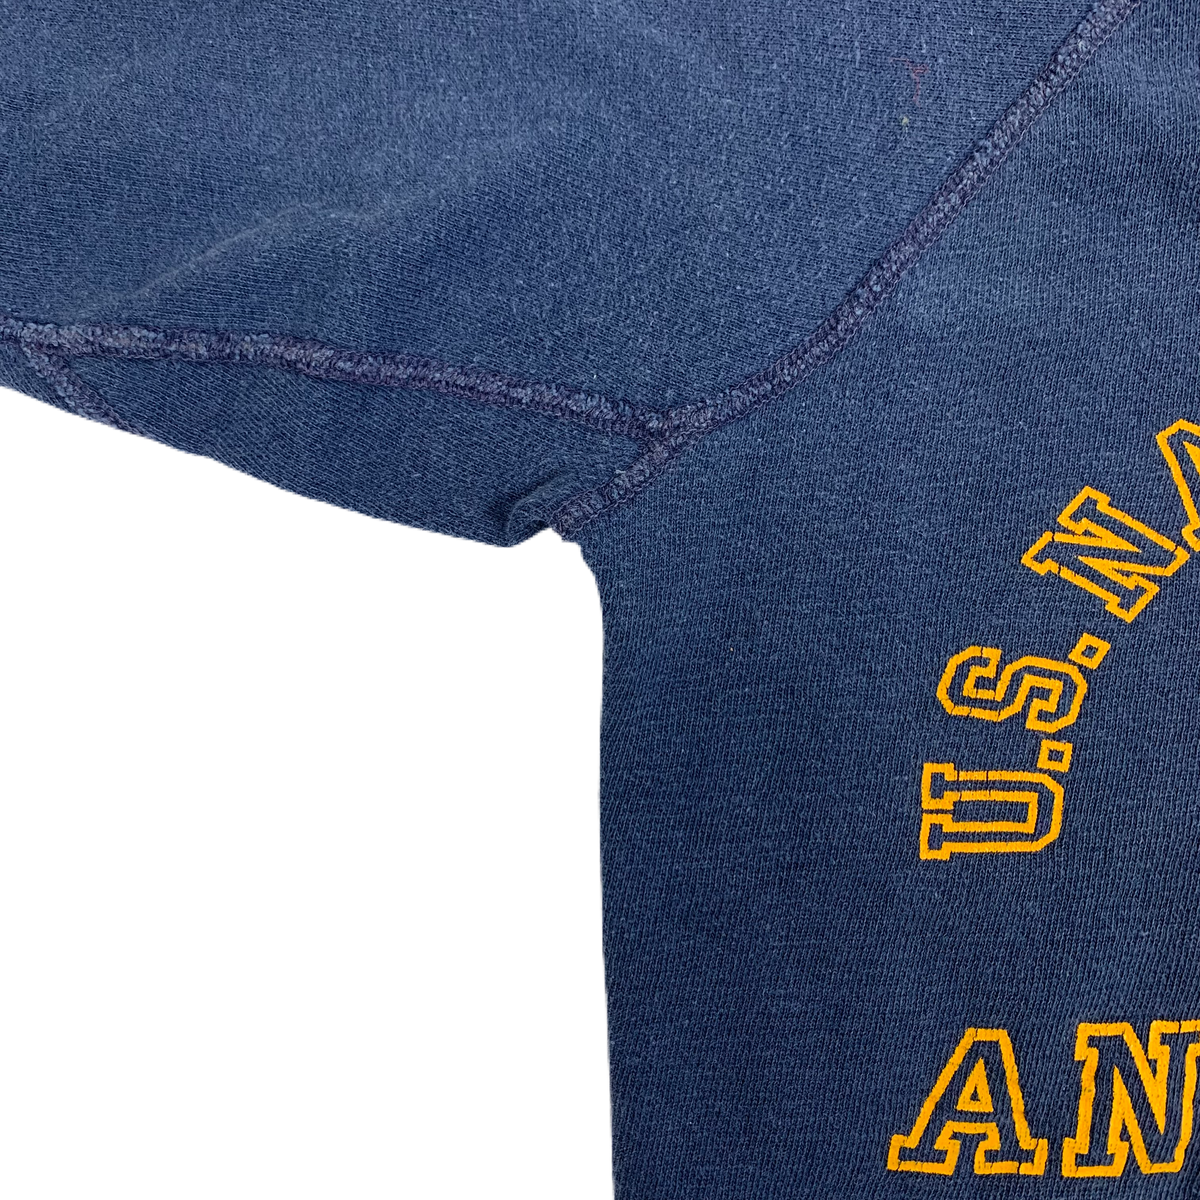 Vintage U.S. Naval Academy &quot;Annapolis&quot; Raglan Sweatshirt